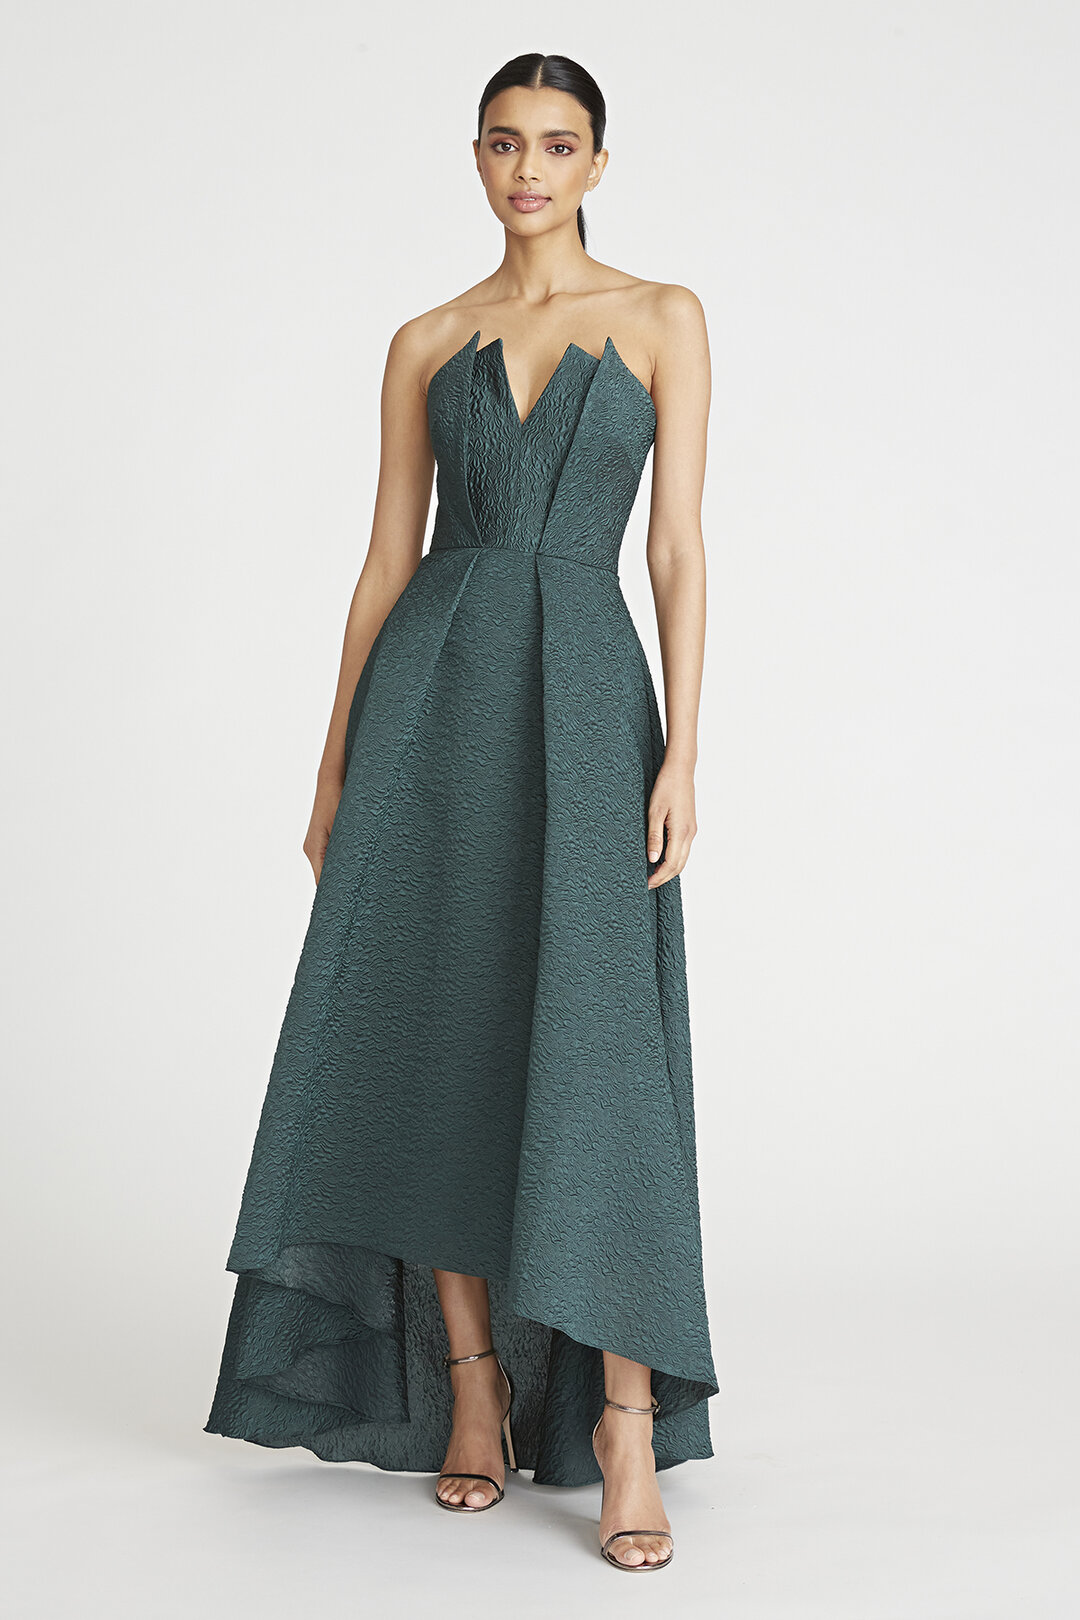 Imogen Strapless Gown - THEIA Dress Rental